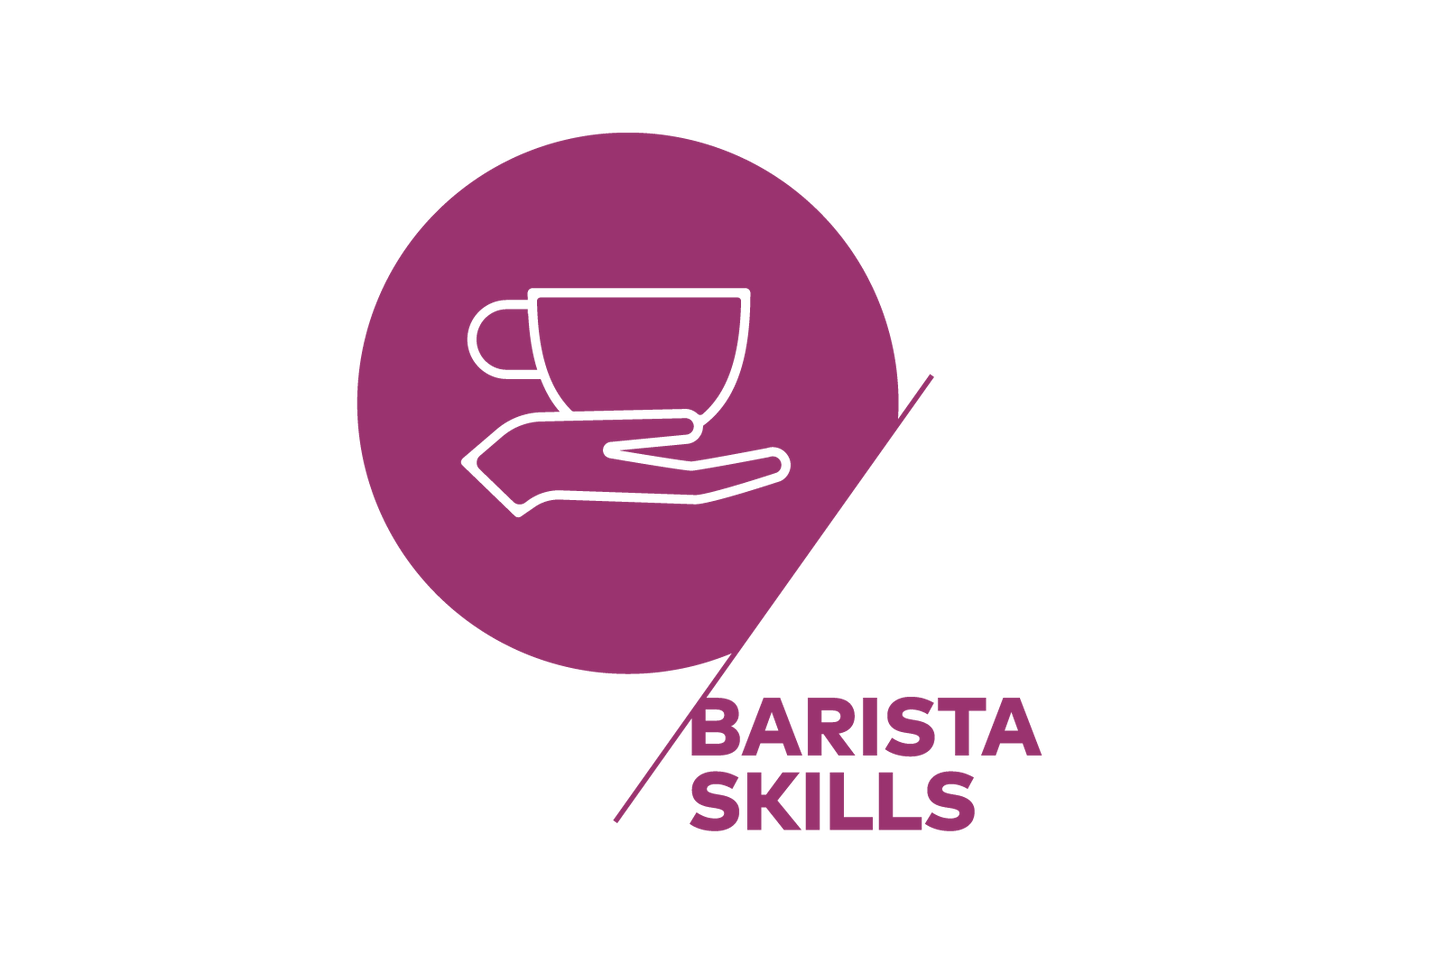 SCA Barista Skills - Foundation